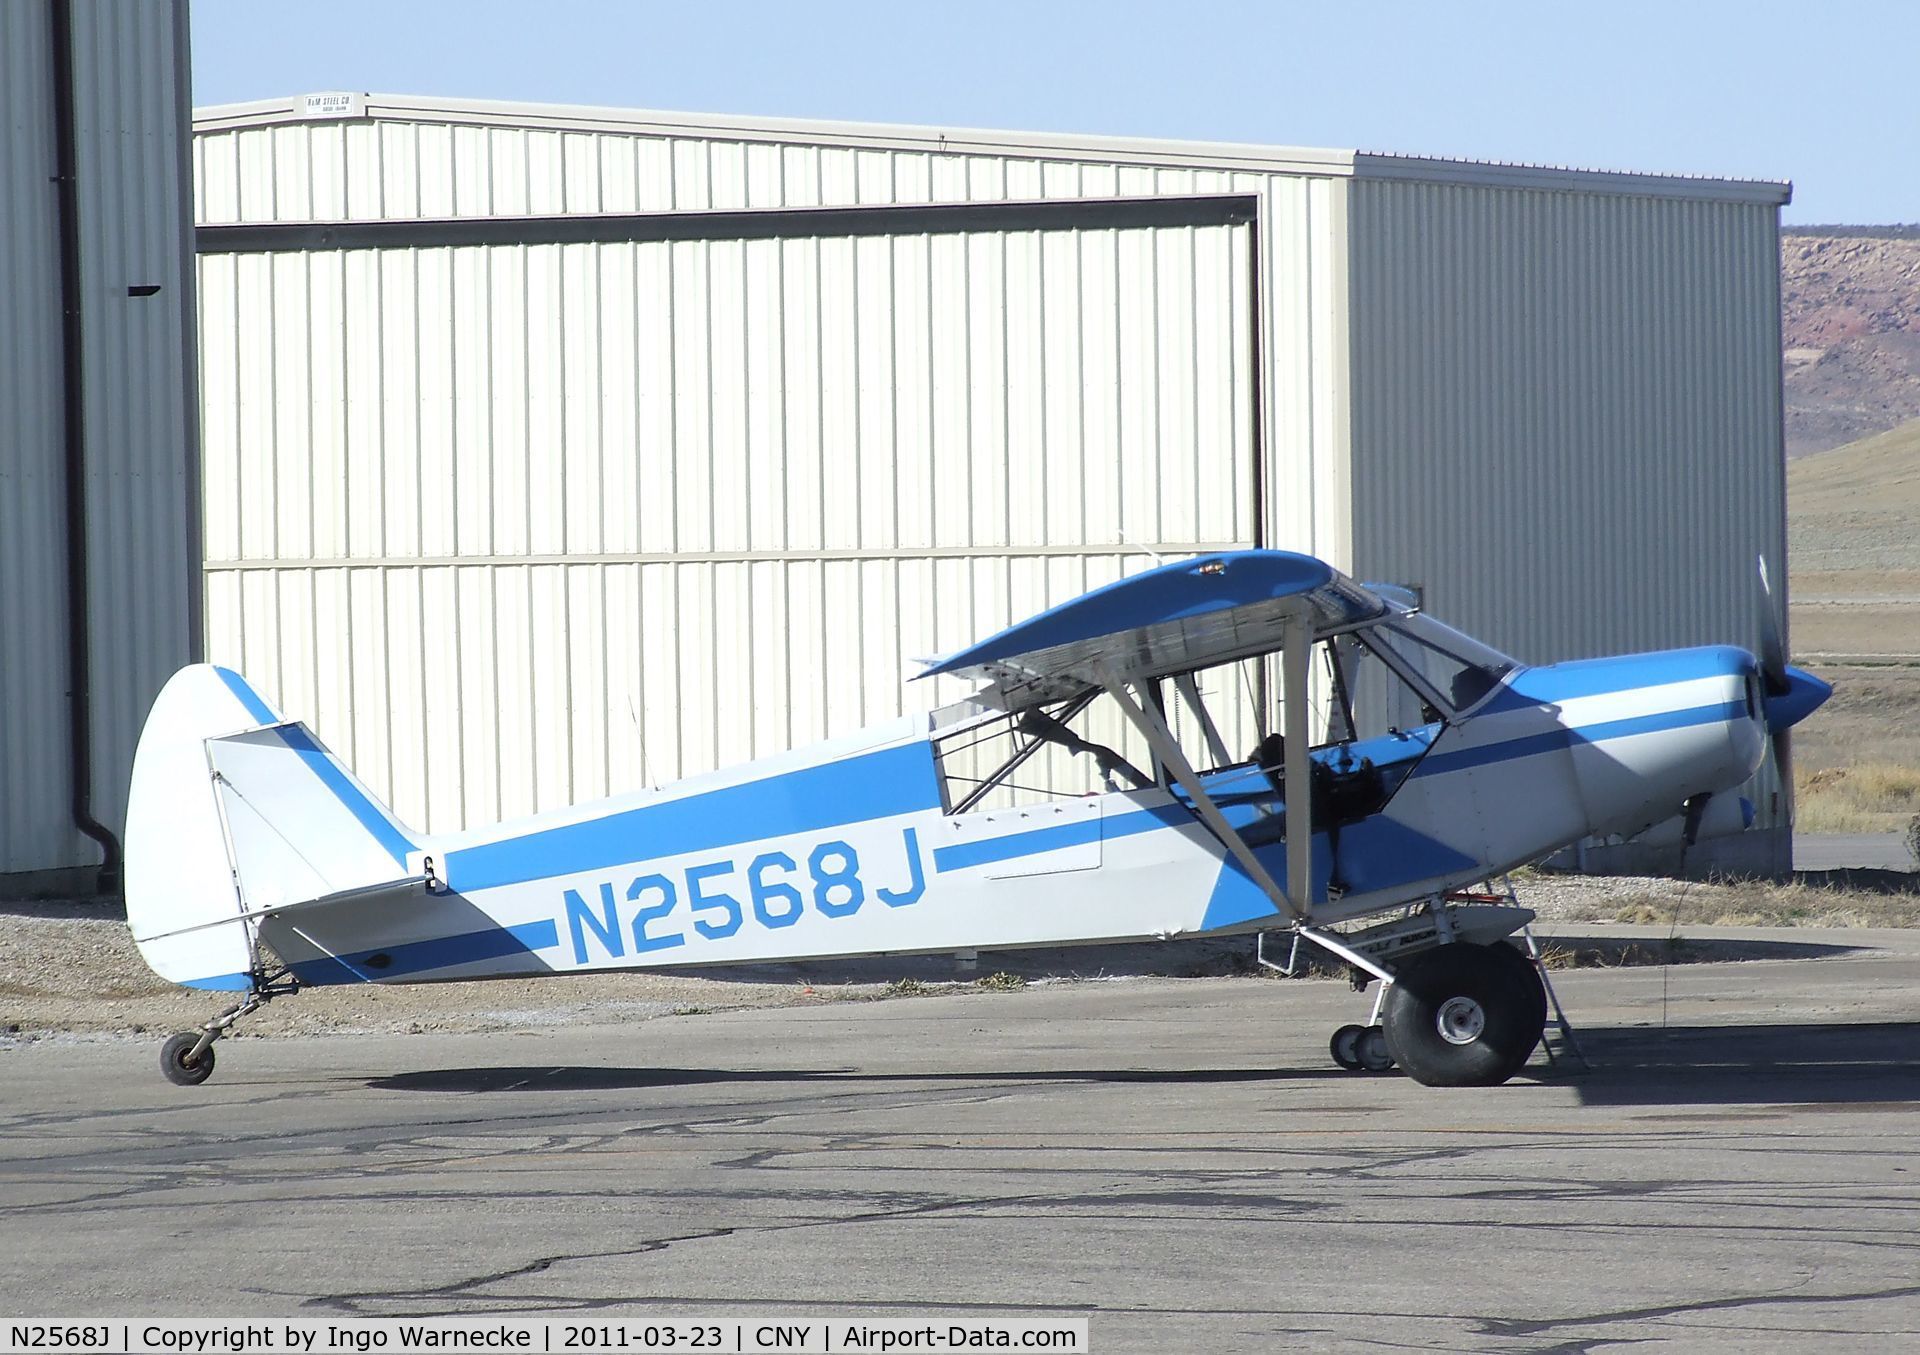 N2568J, 1979 Piper PA-18-150 Super Cub C/N 18-7909131, Piper PA-18-150 Super Cub at Canyonlands Field airport, Moab UT